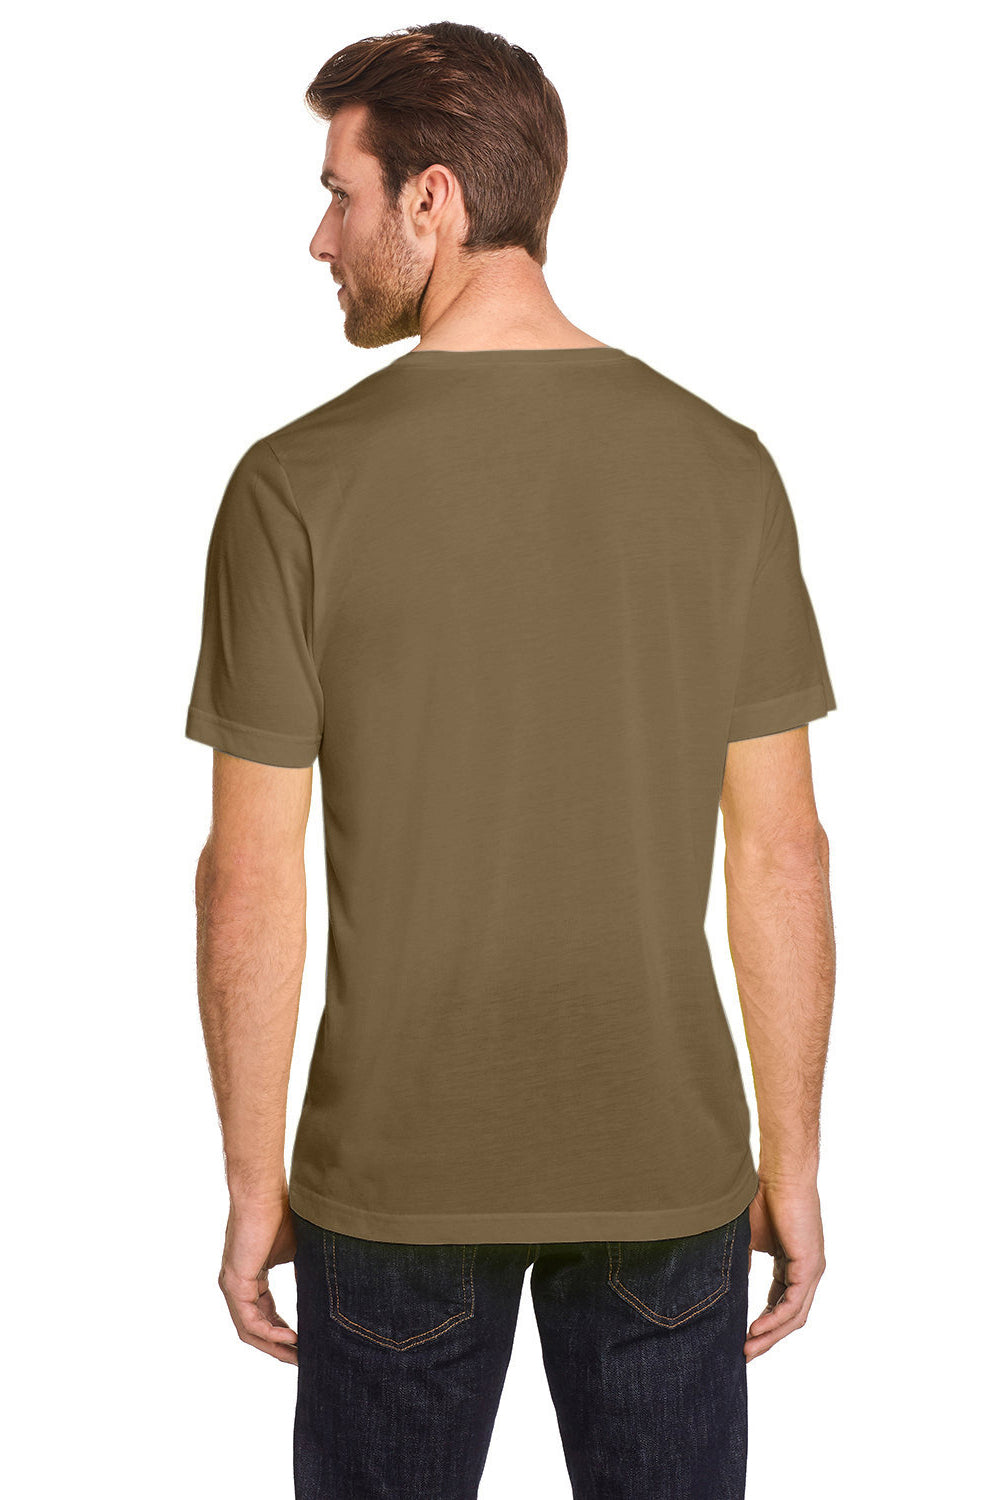 Core 365 CE111 Mens Fusion ChromaSoft Performance Moisture Wicking Short Sleeve Crewneck T-Shirt Coyote Brown Back